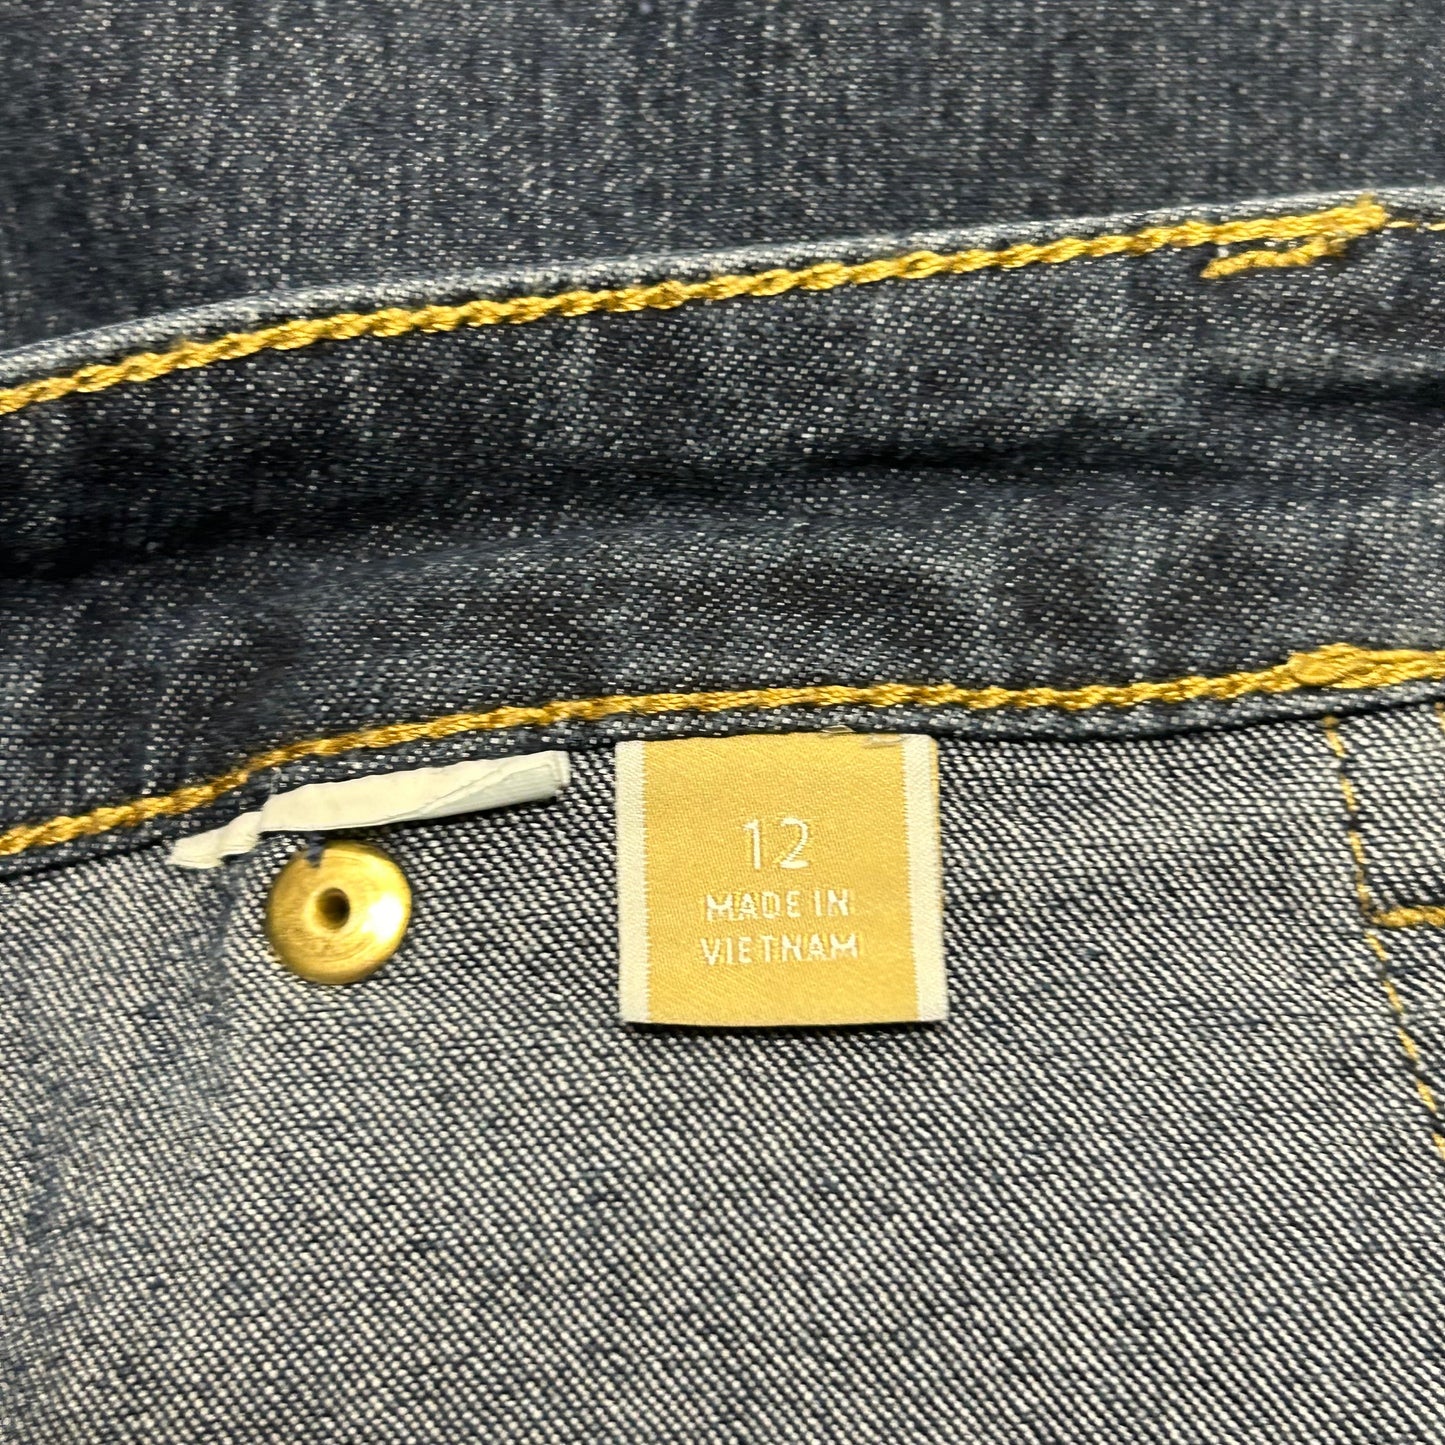 Blue Denim Jeans Designer By Michael Kors, Size: 12